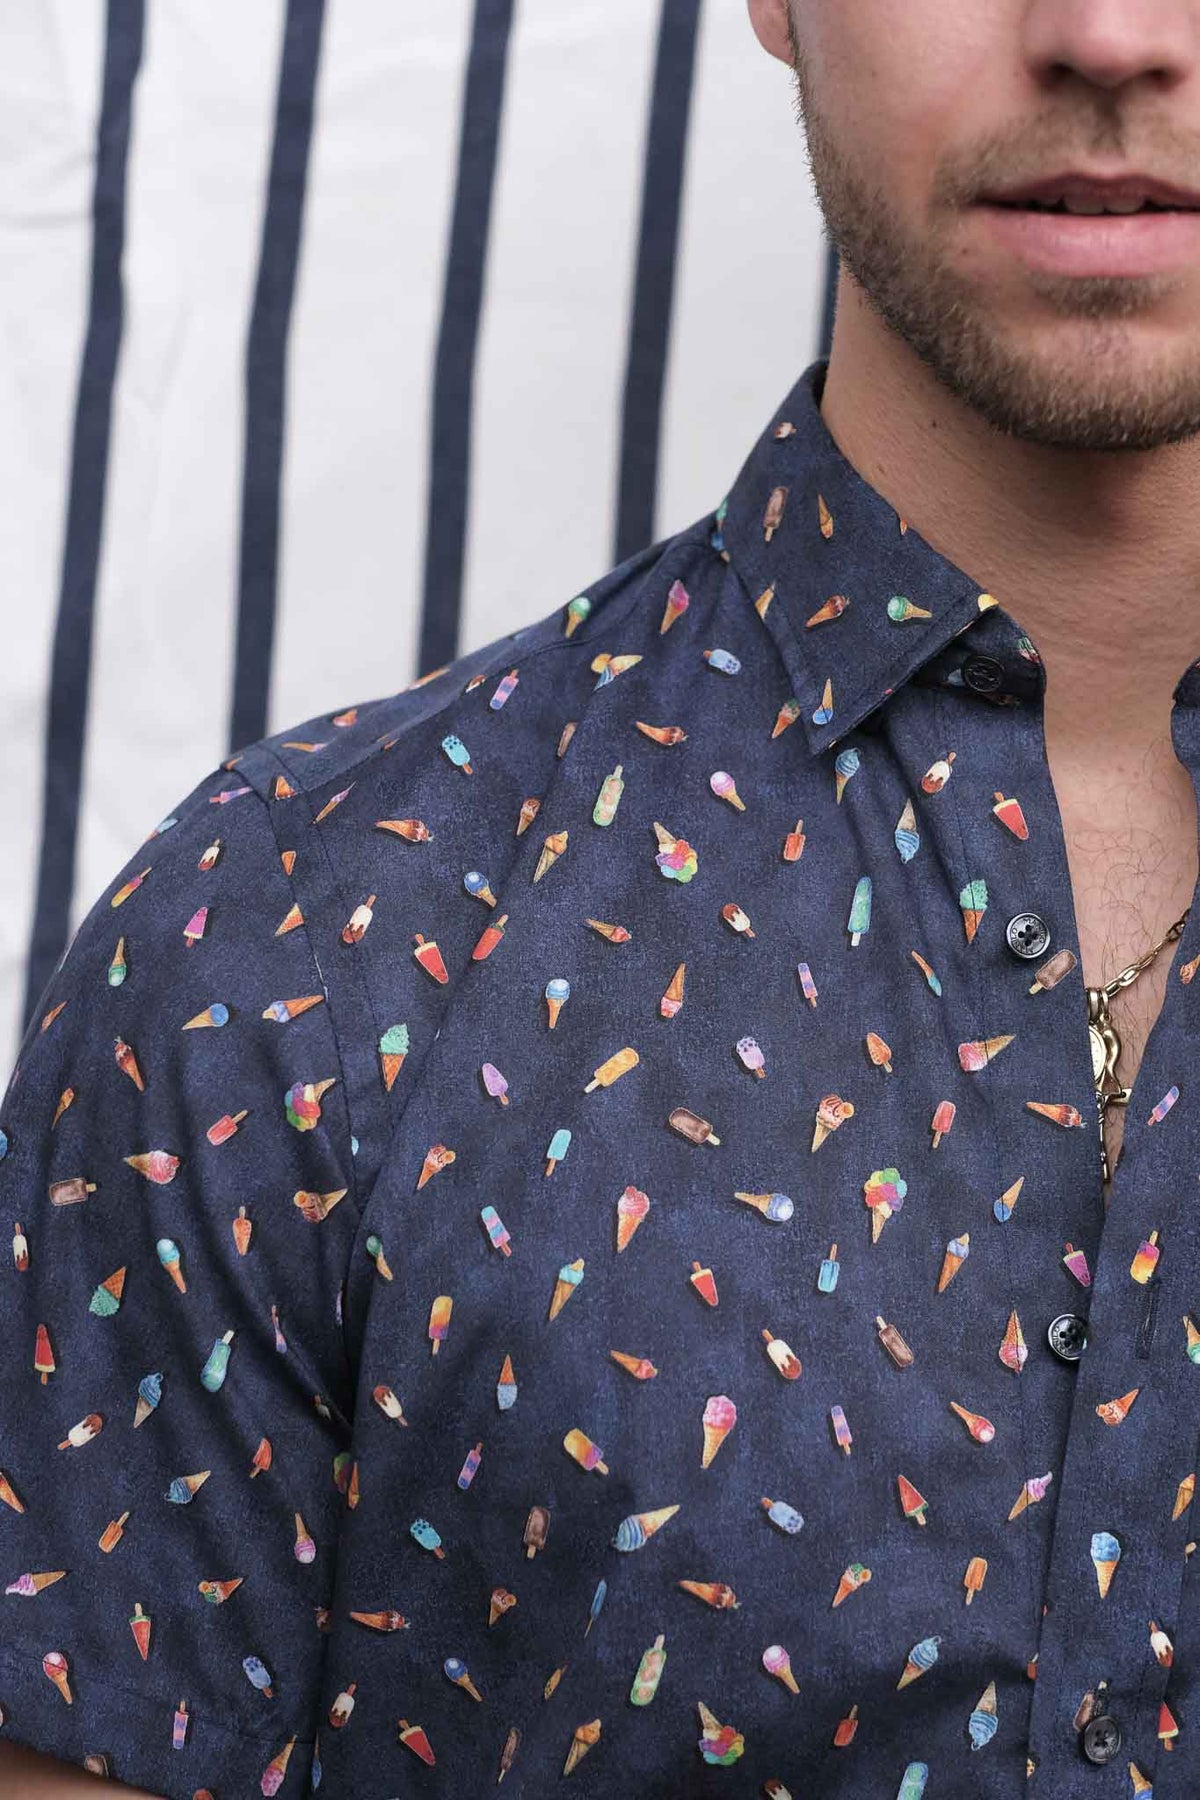 Casual shirt with summery print pattern (Art. 2224-C-KA)